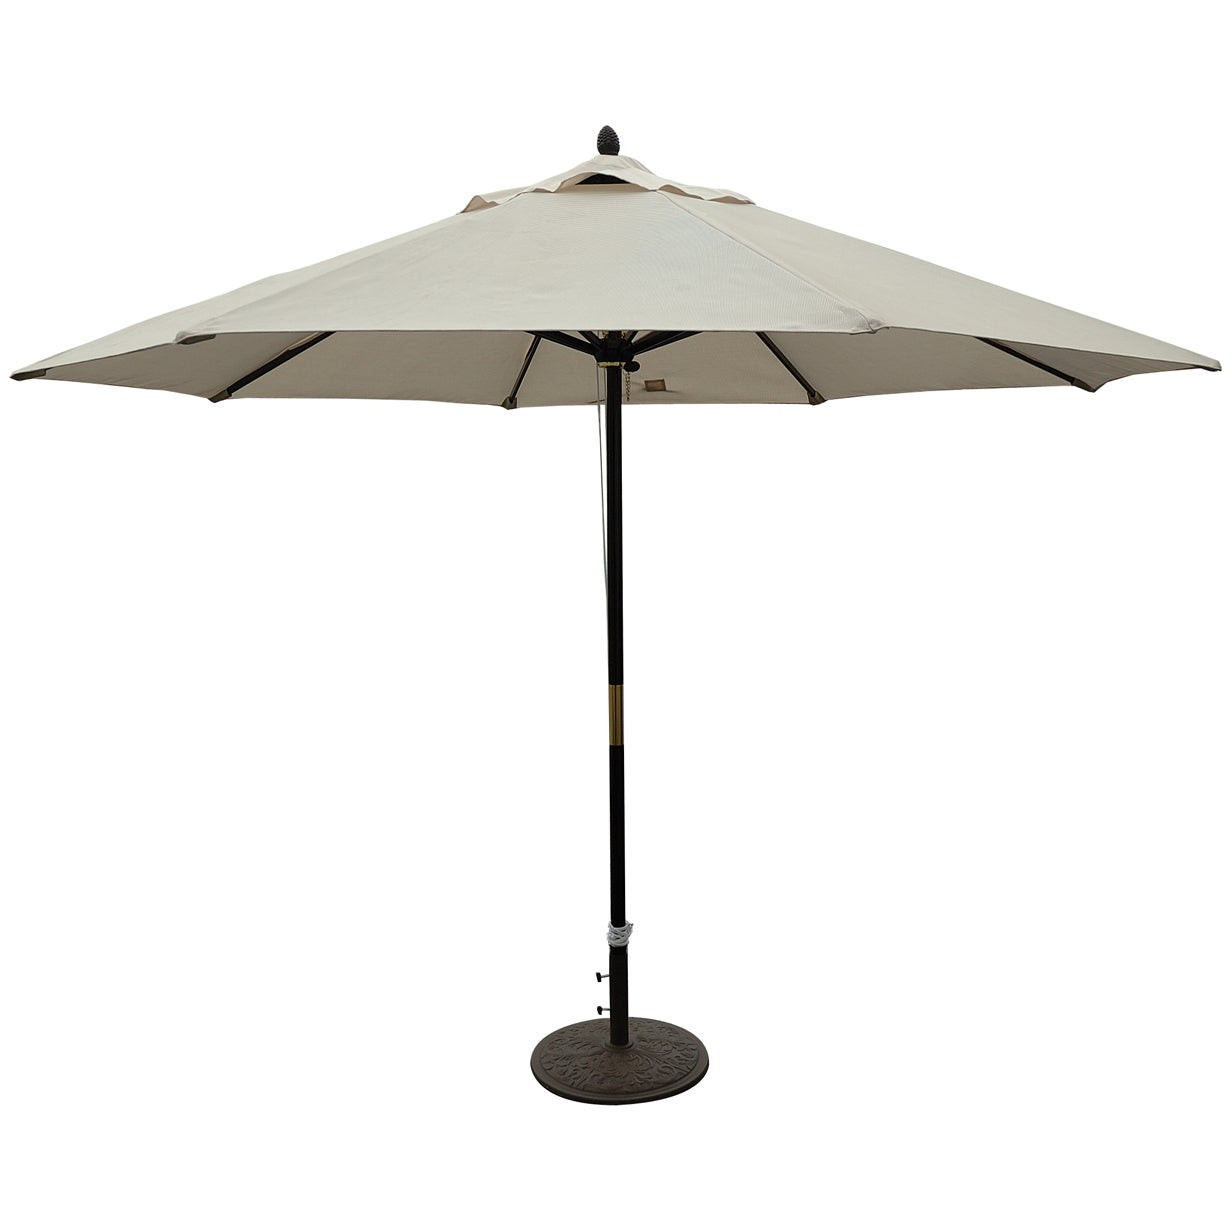 Best ideas about 11 Foot Patio Umbrella
. Save or Pin TropiShade 11 foot Premium Beige Dark Wood Market Umbrella Now.